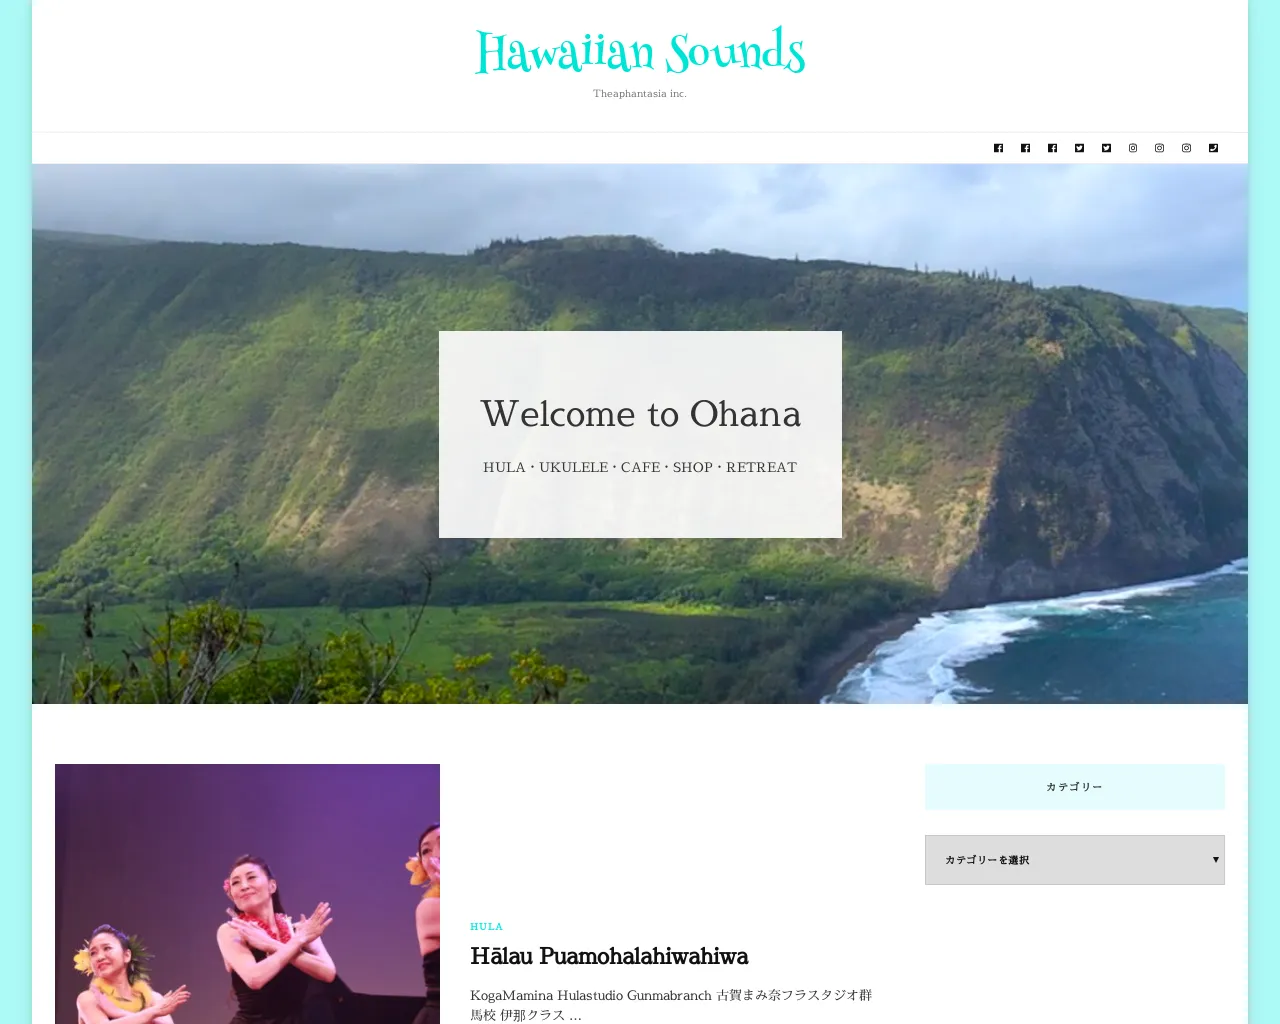 Hawaiiansounds site